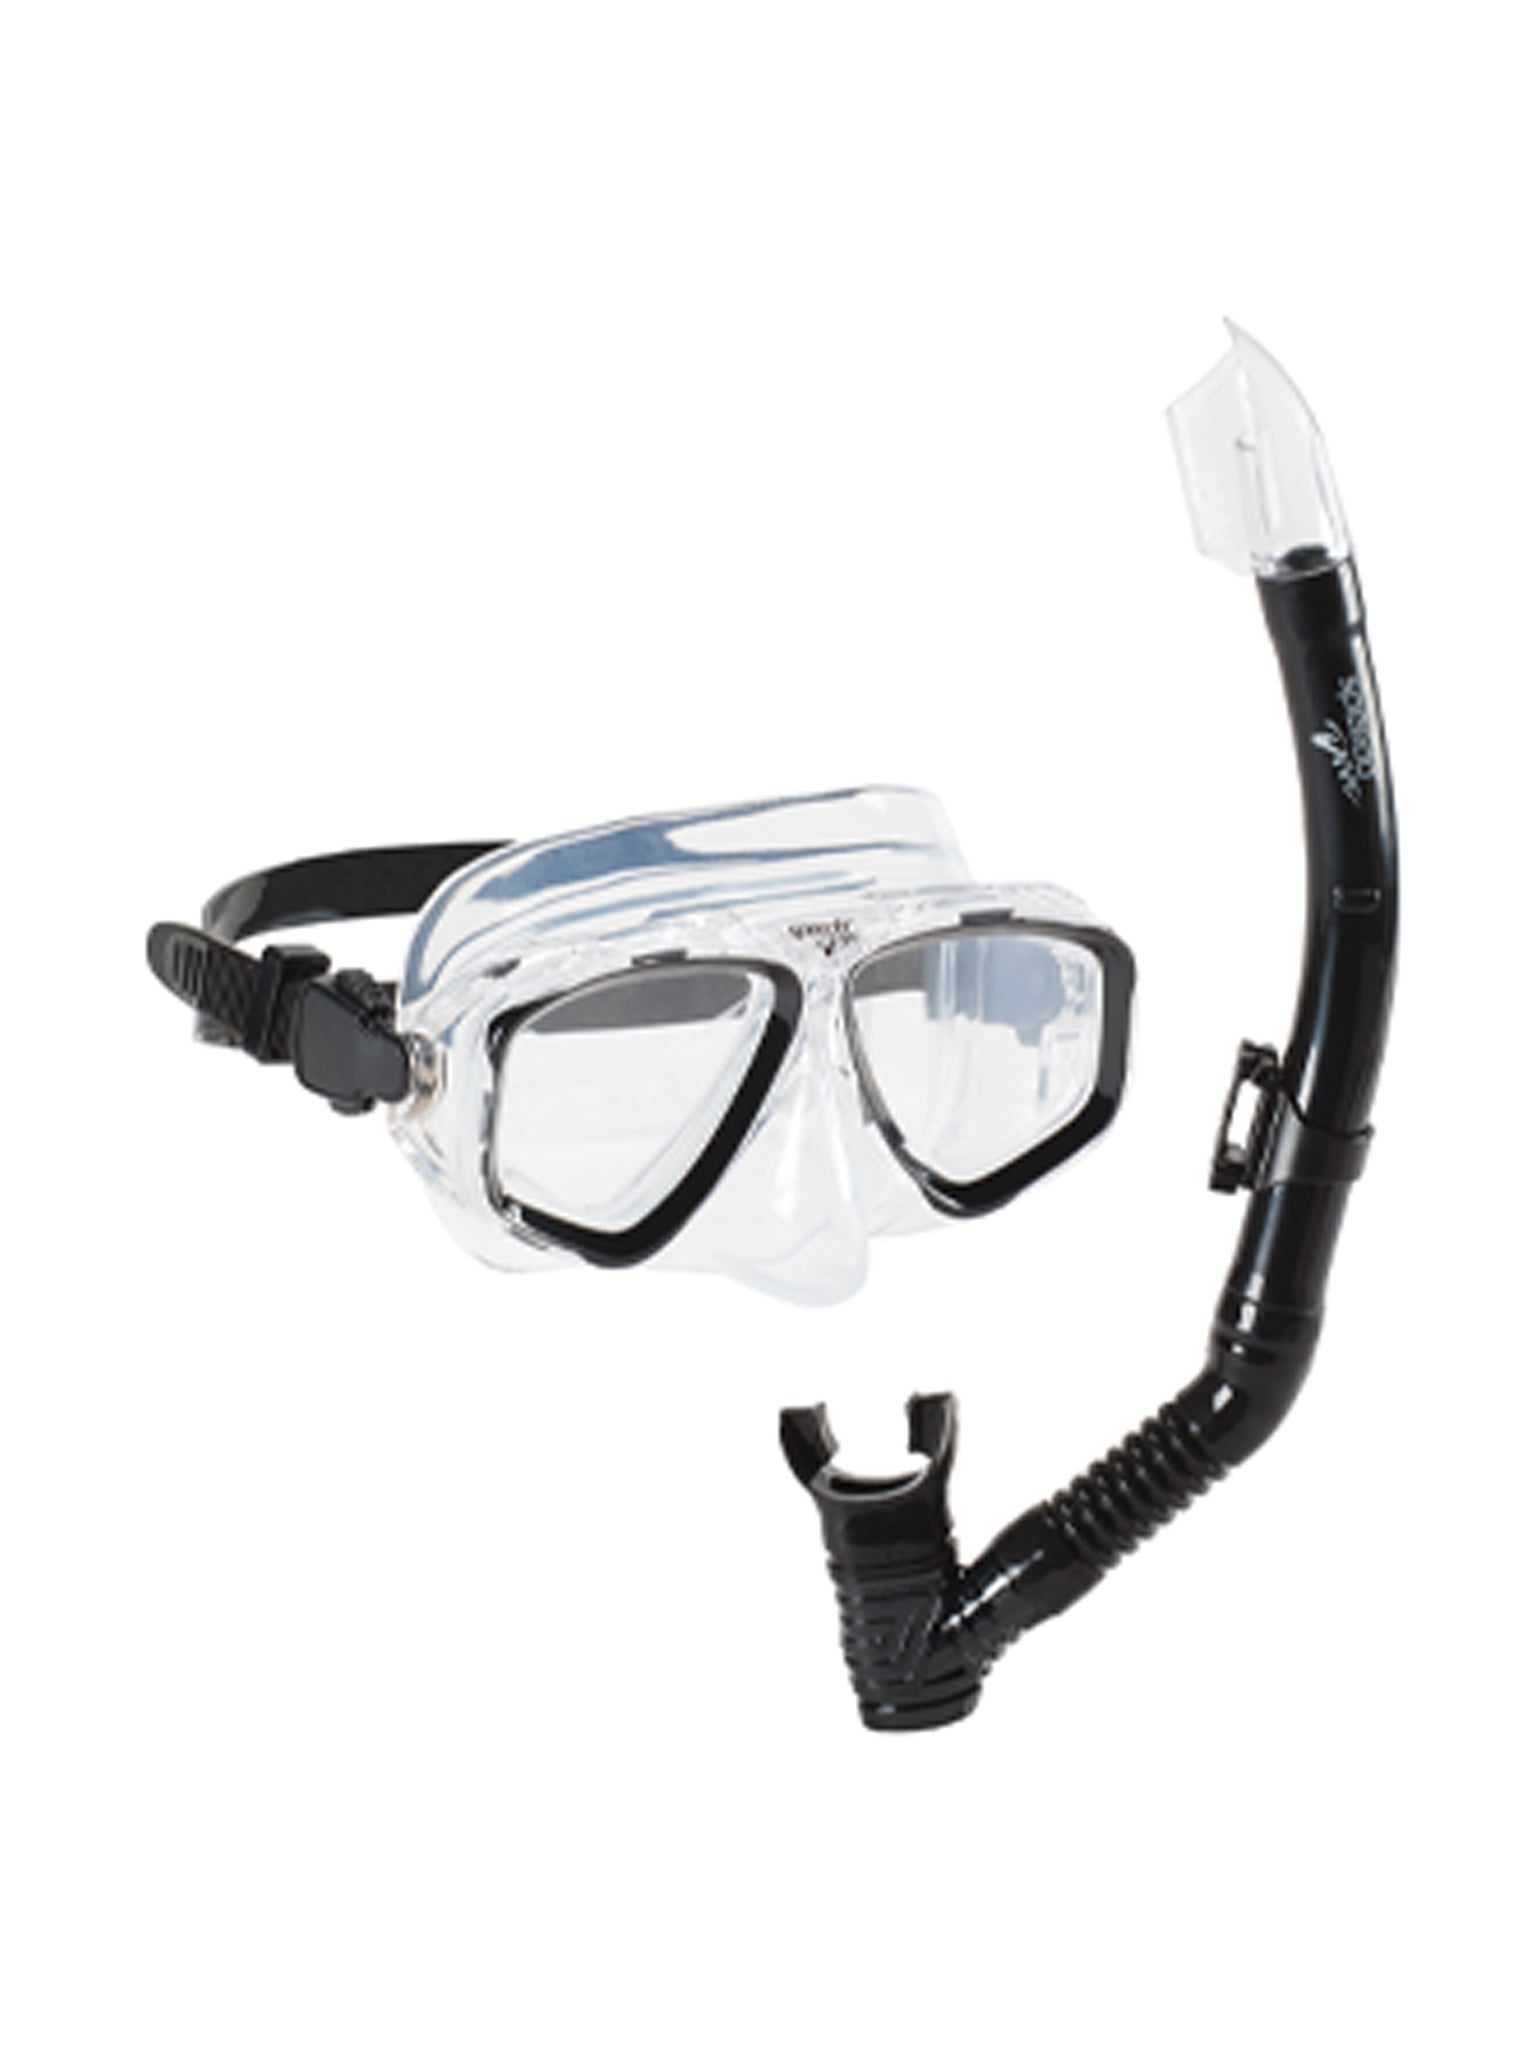 Adult Adventure Mask and Snorkel Set - Black